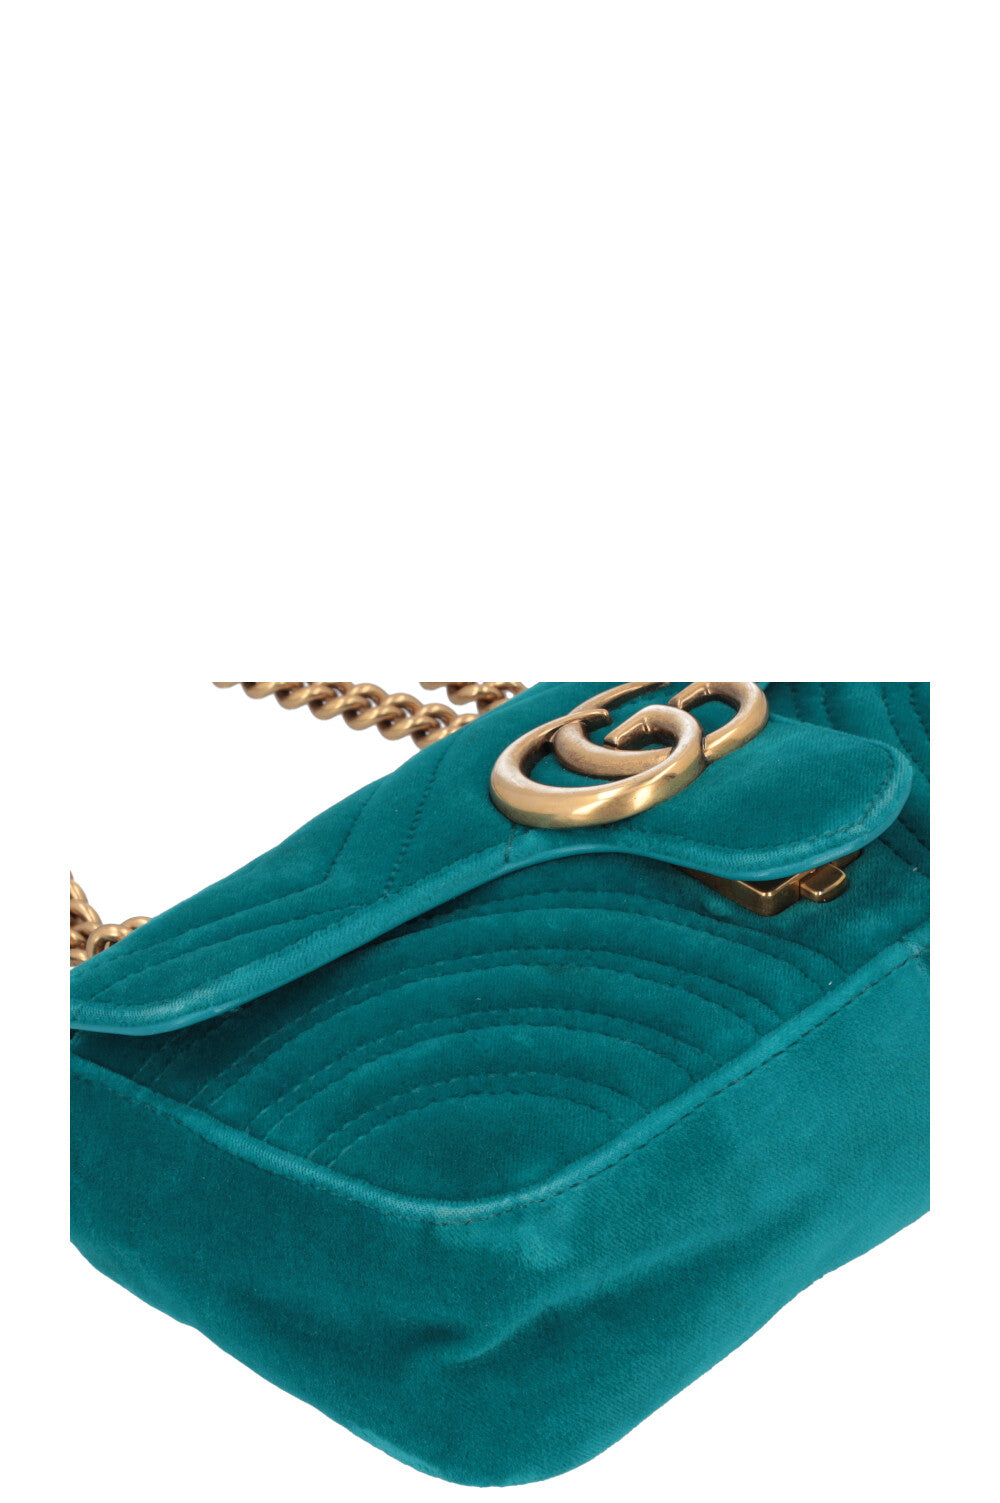 GUCCI GG Marmont Bag Mini Velvet Turquoise